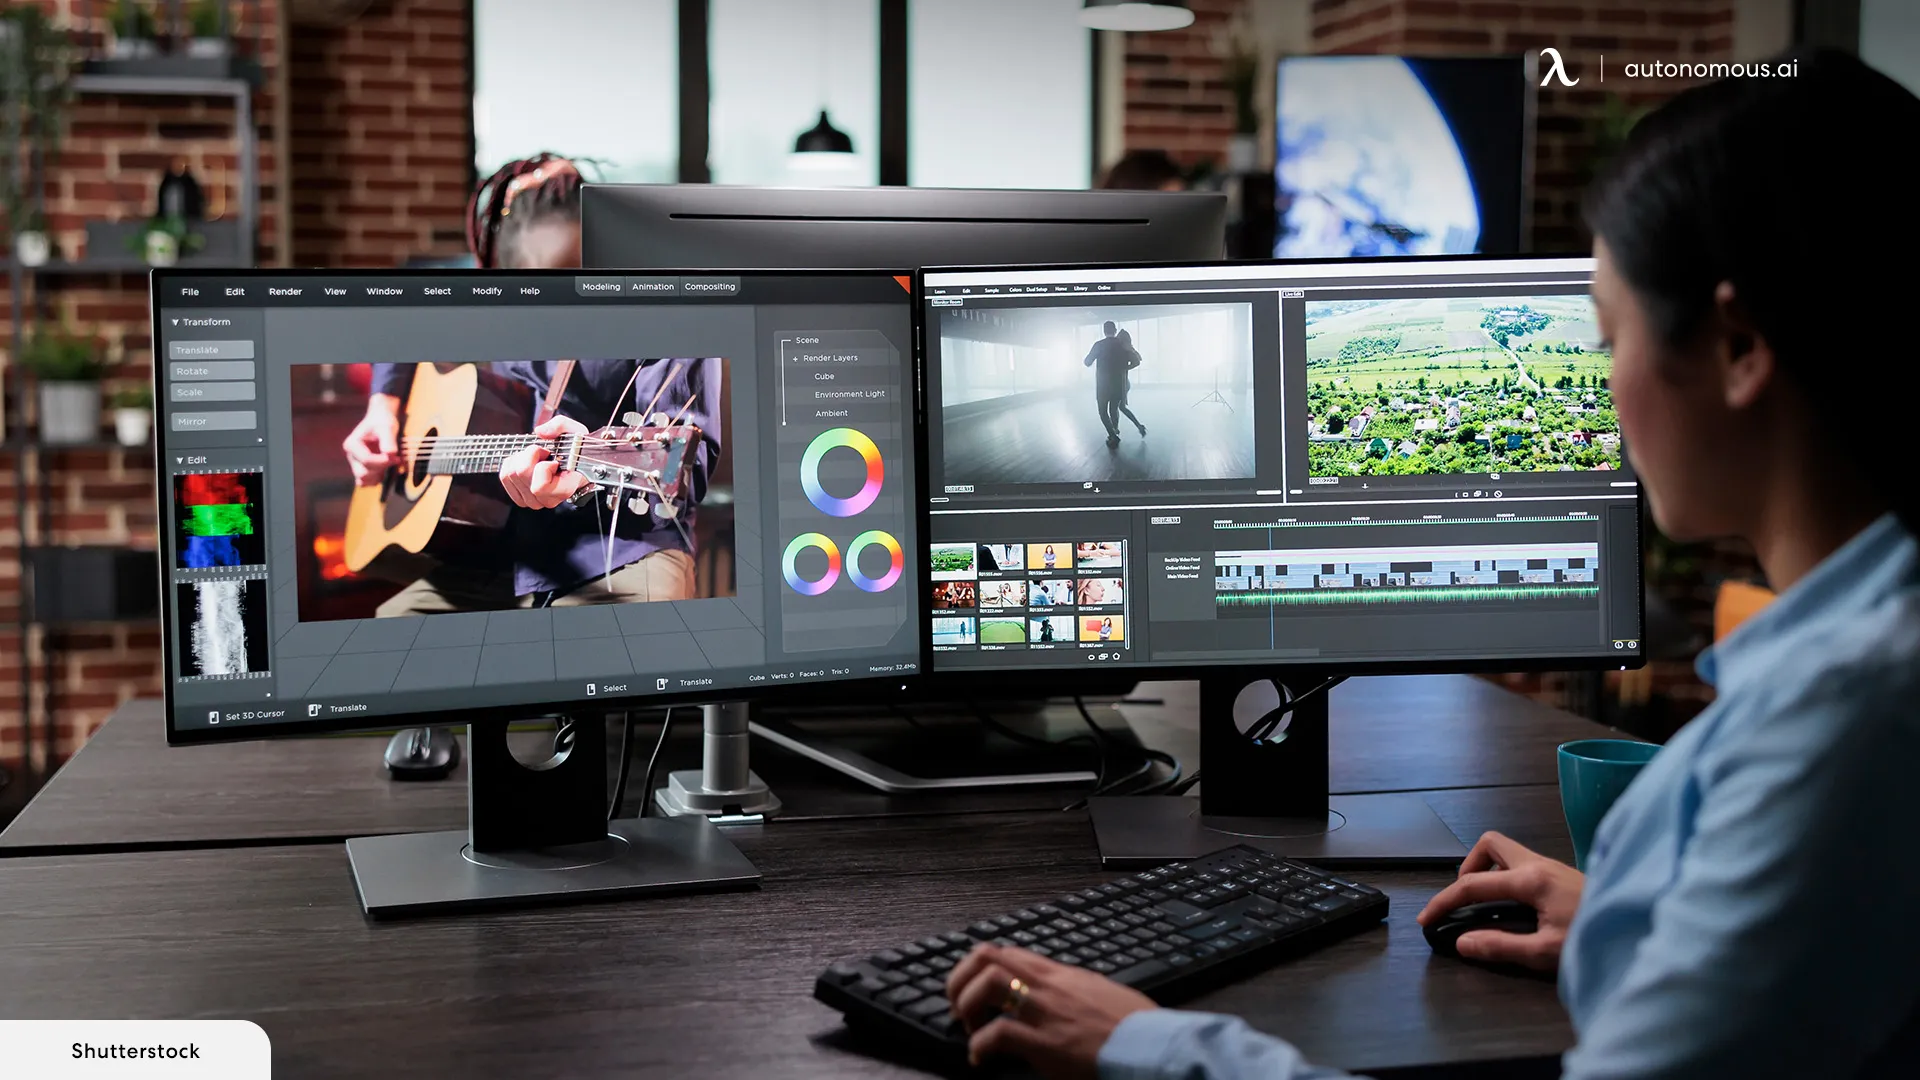 dual monitor setup can greatly enhance productivity